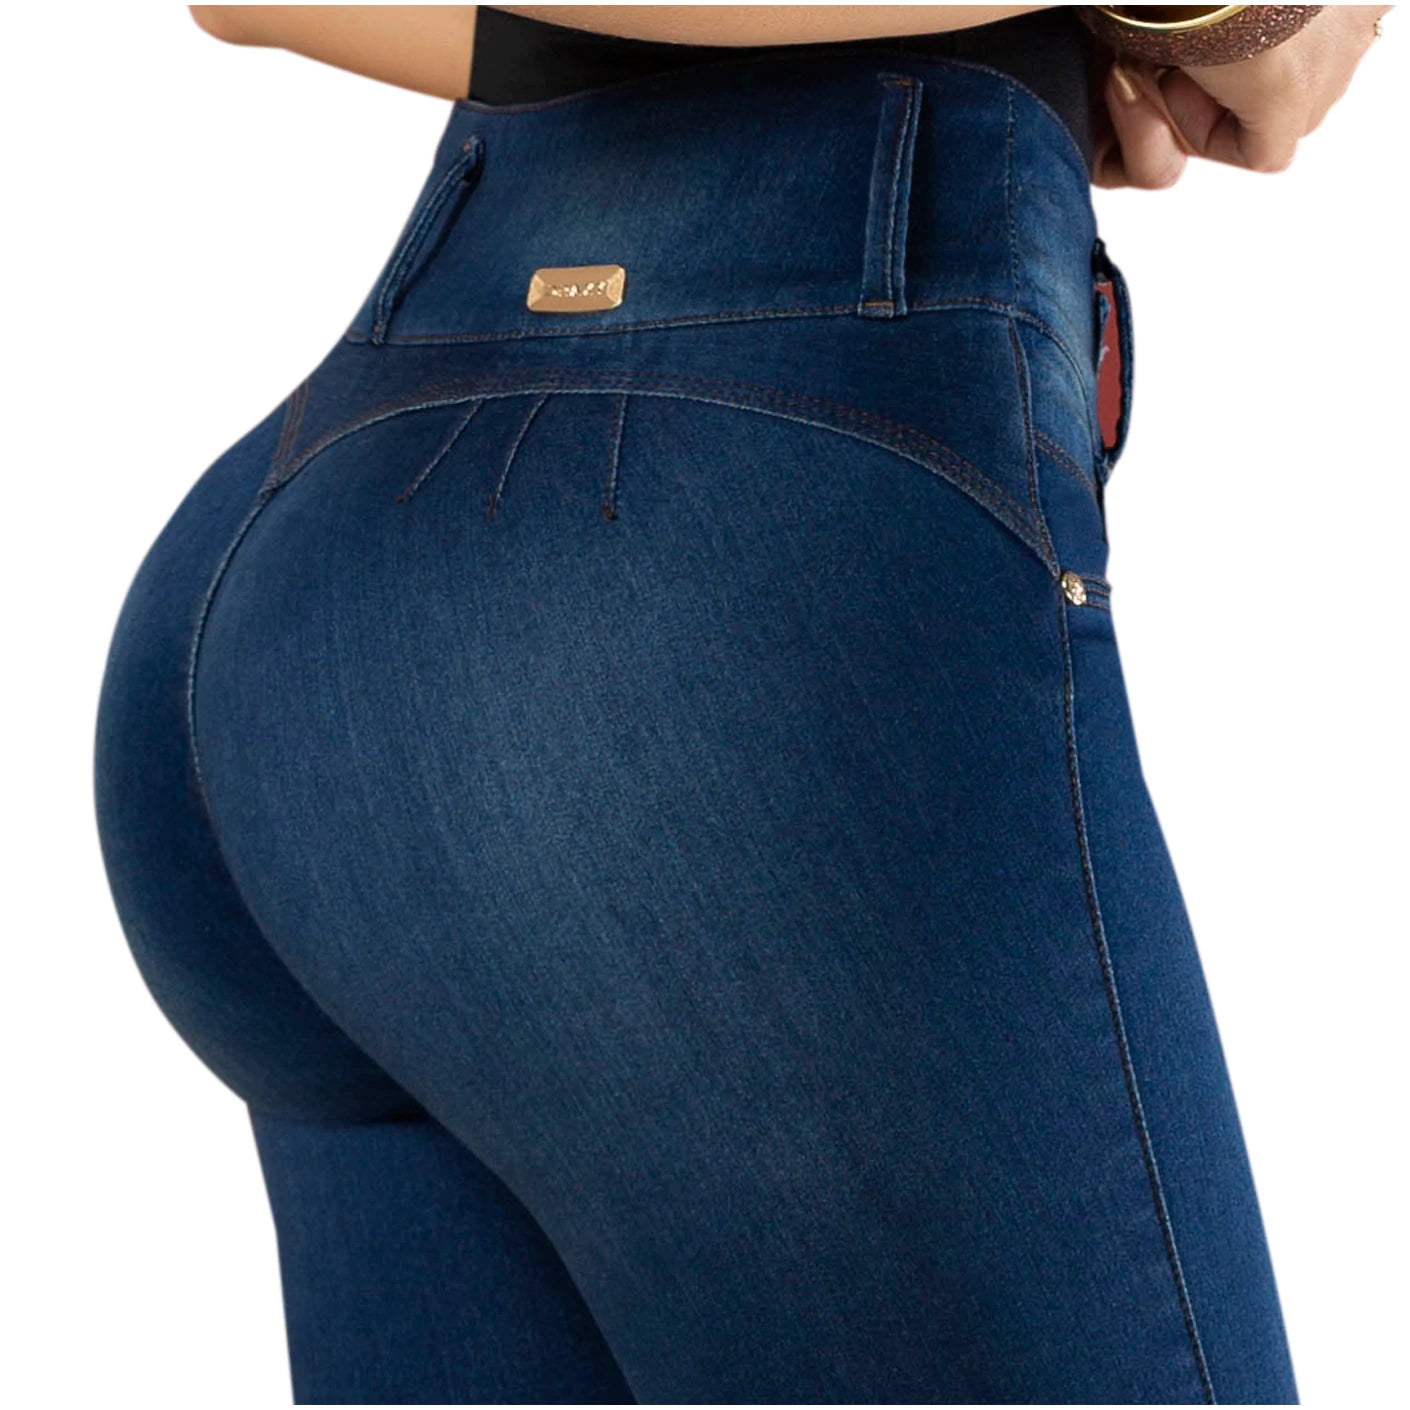 Colombian Butt Lift Jeans Texas